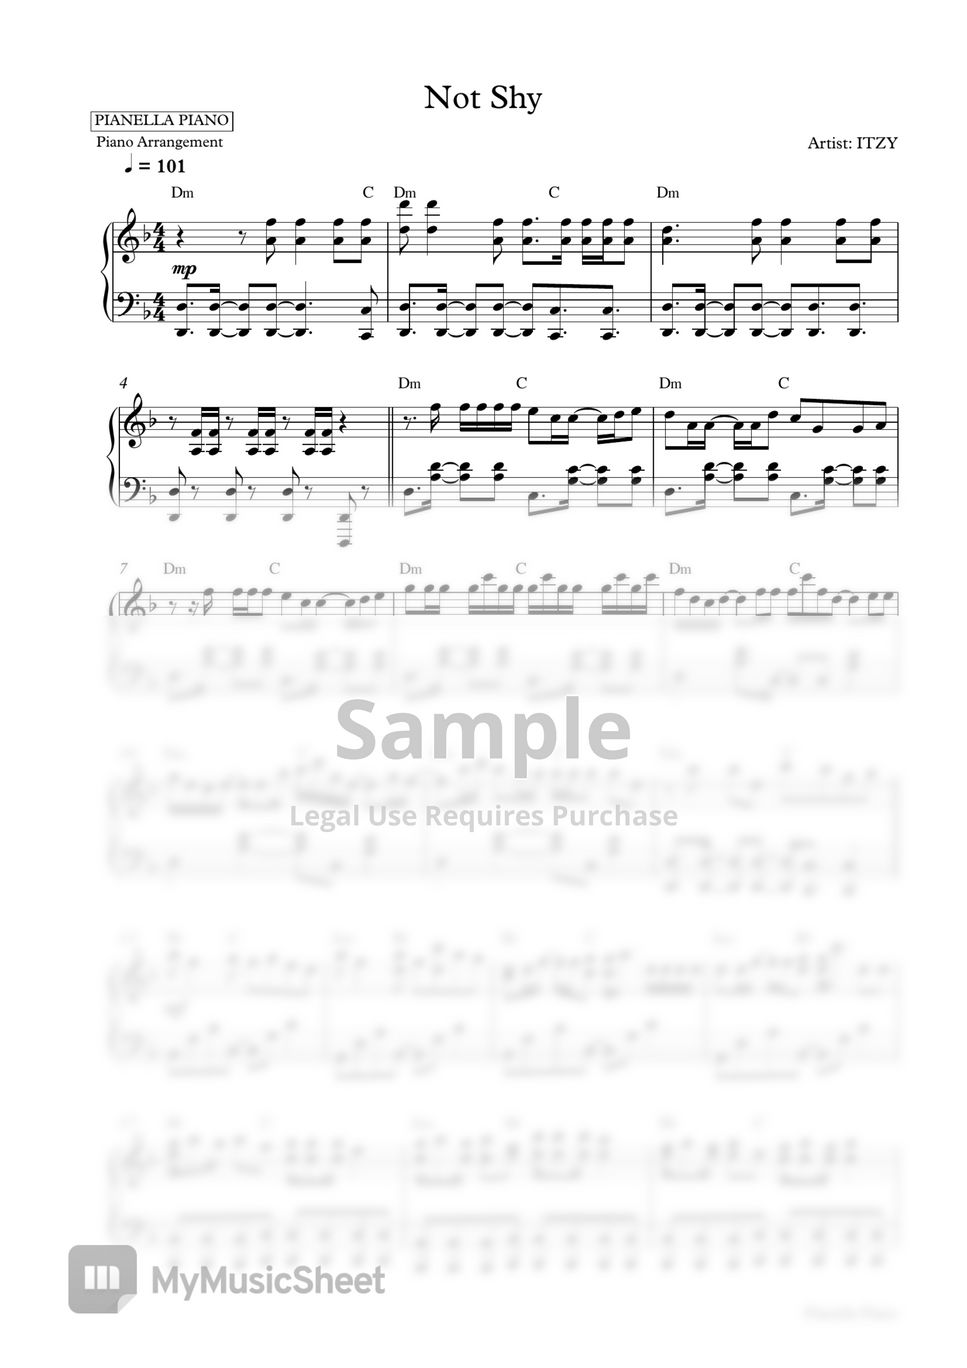 ITZY - Not Shy (Piano Sheet) by Pianella Piano